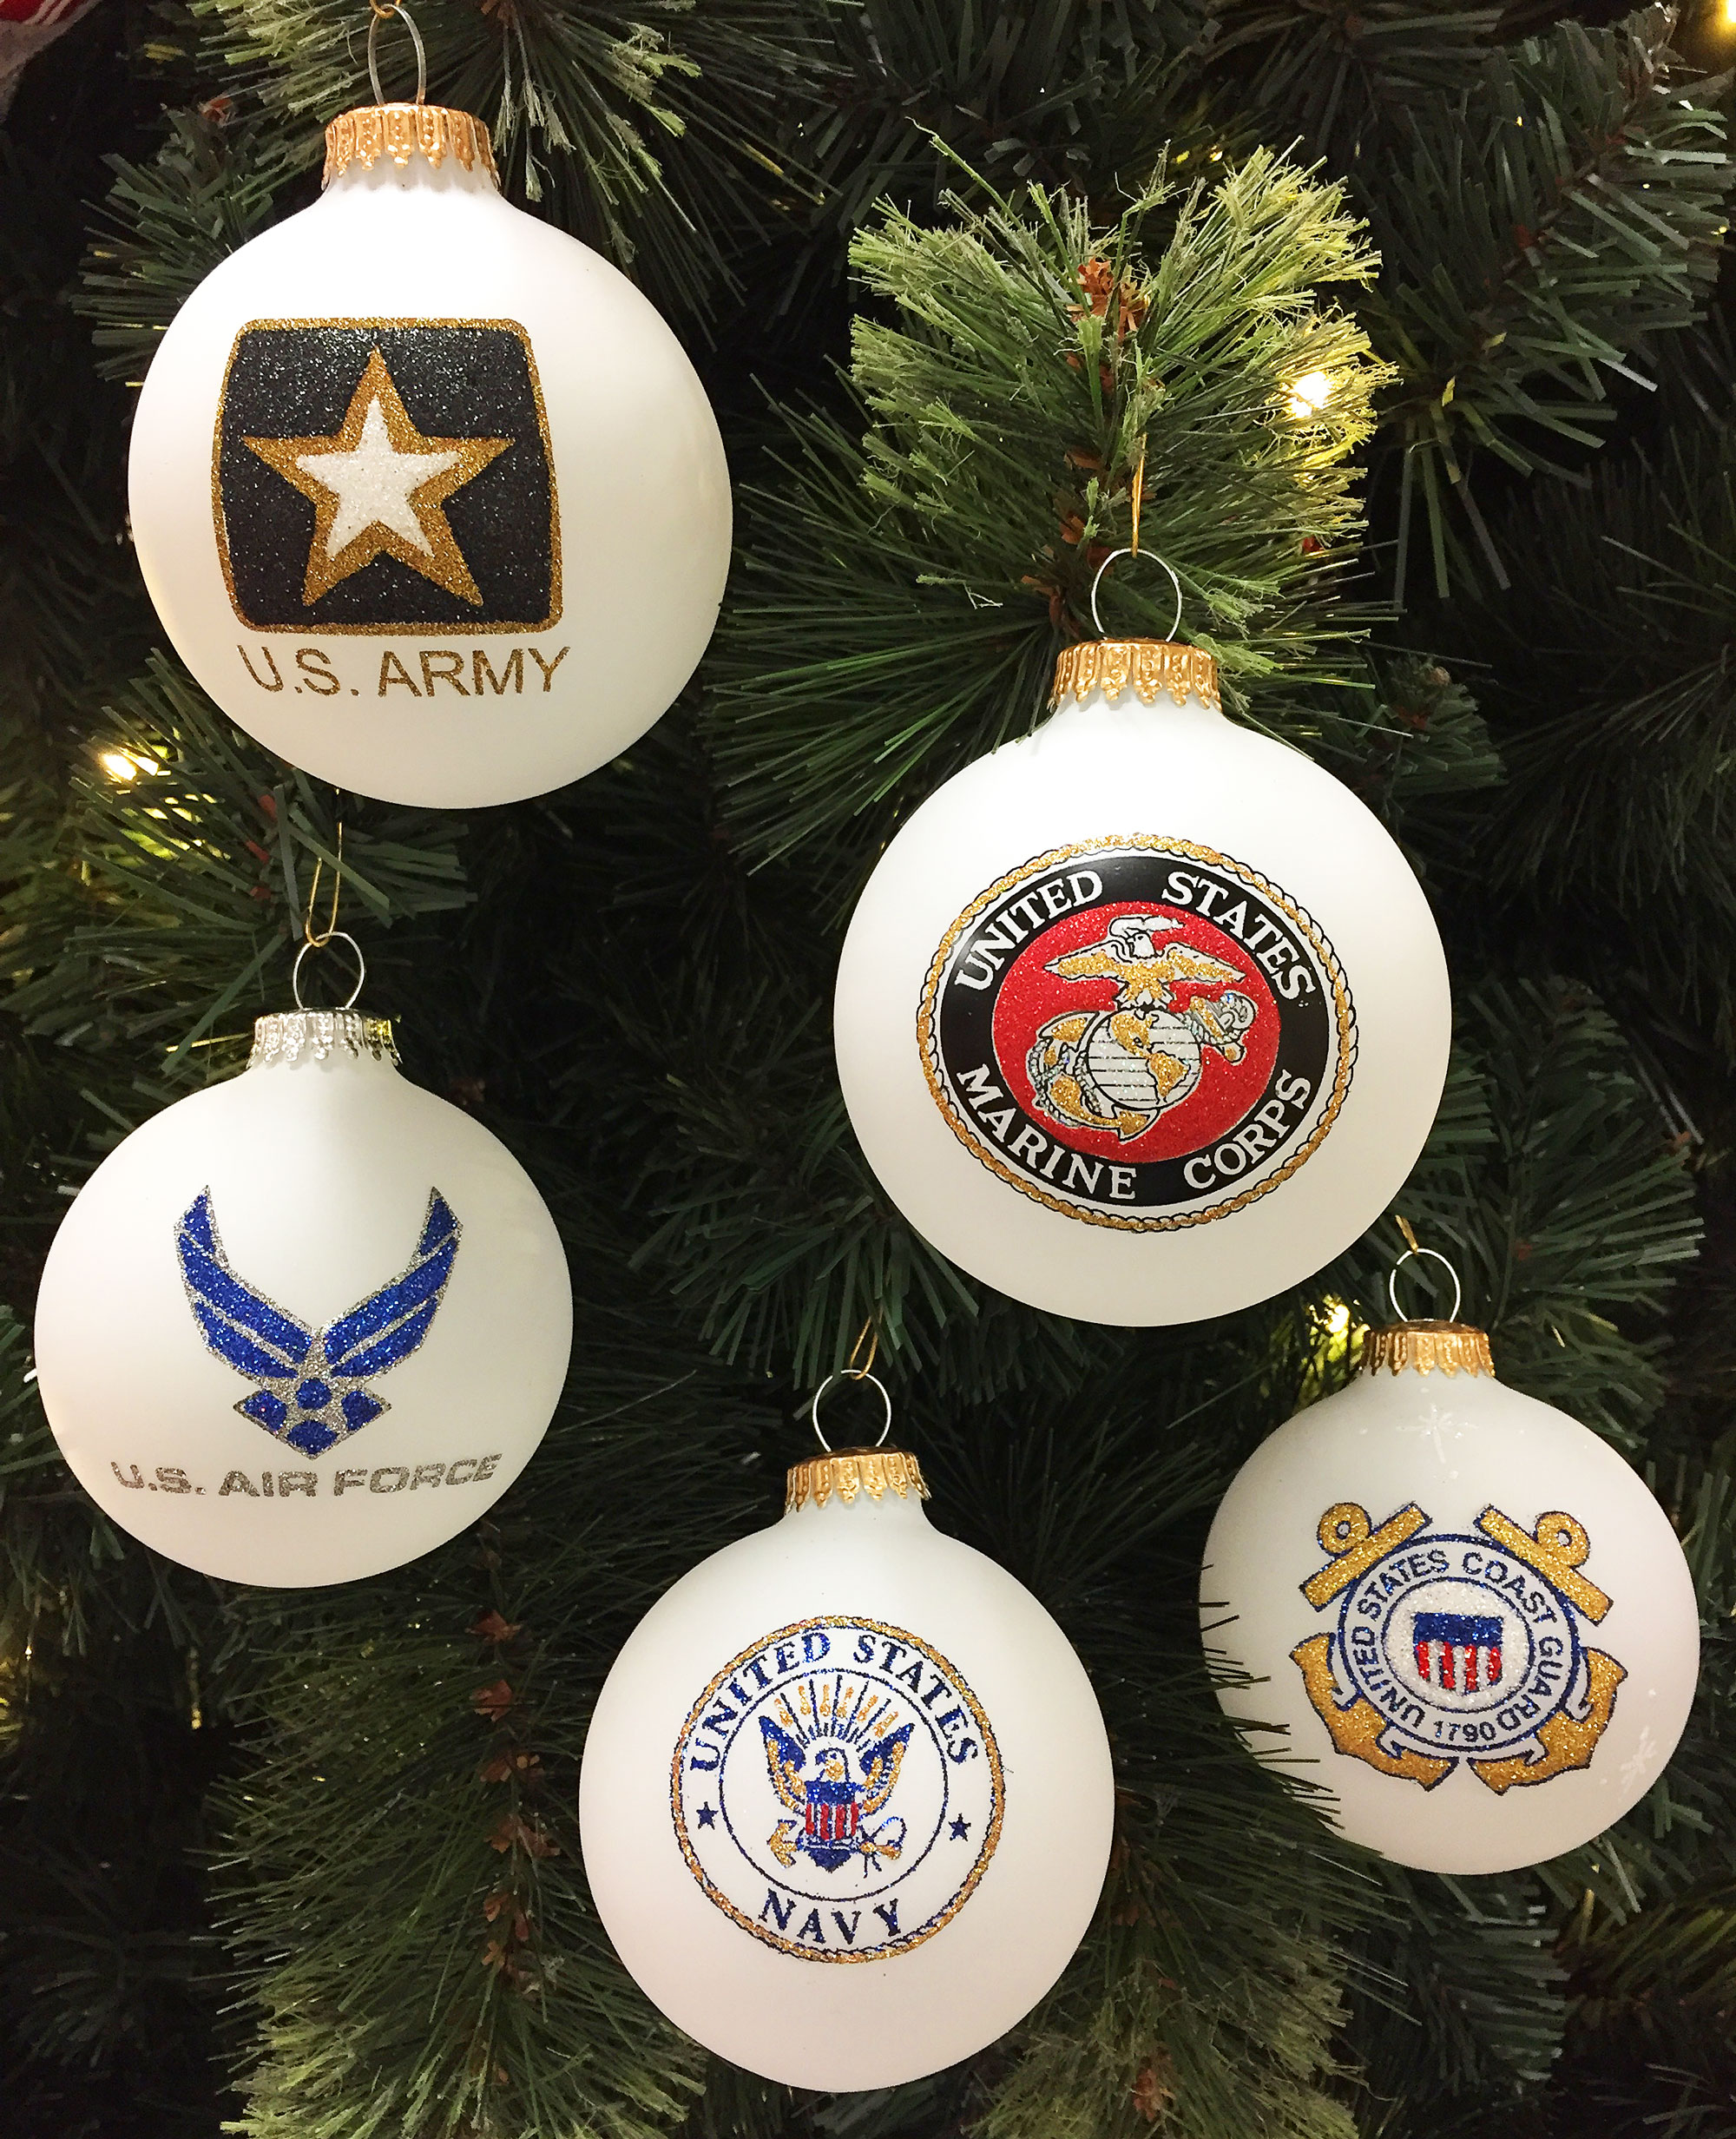 Military ball ornaments that represent the U.S. Army, Navy, Marines, Air-force and Coast Guard | OrnamentShop.com